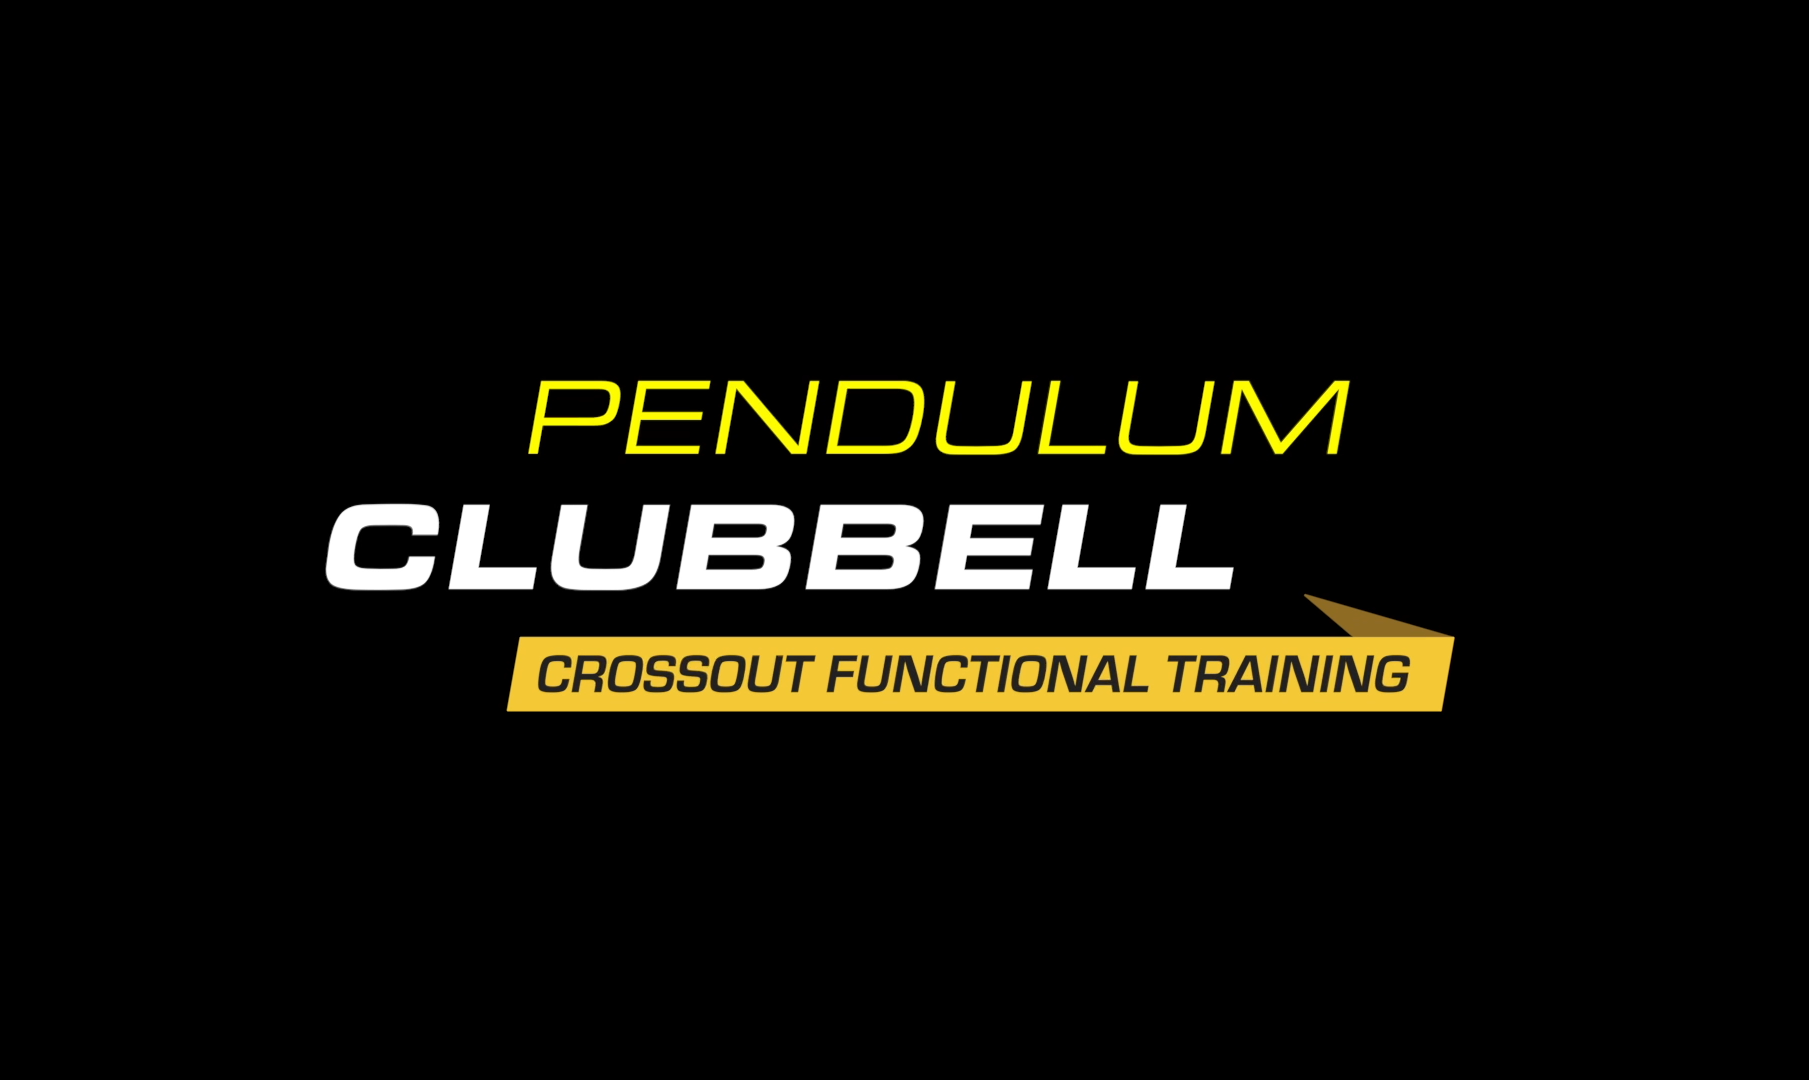 Pendulum Crossout Functional Training